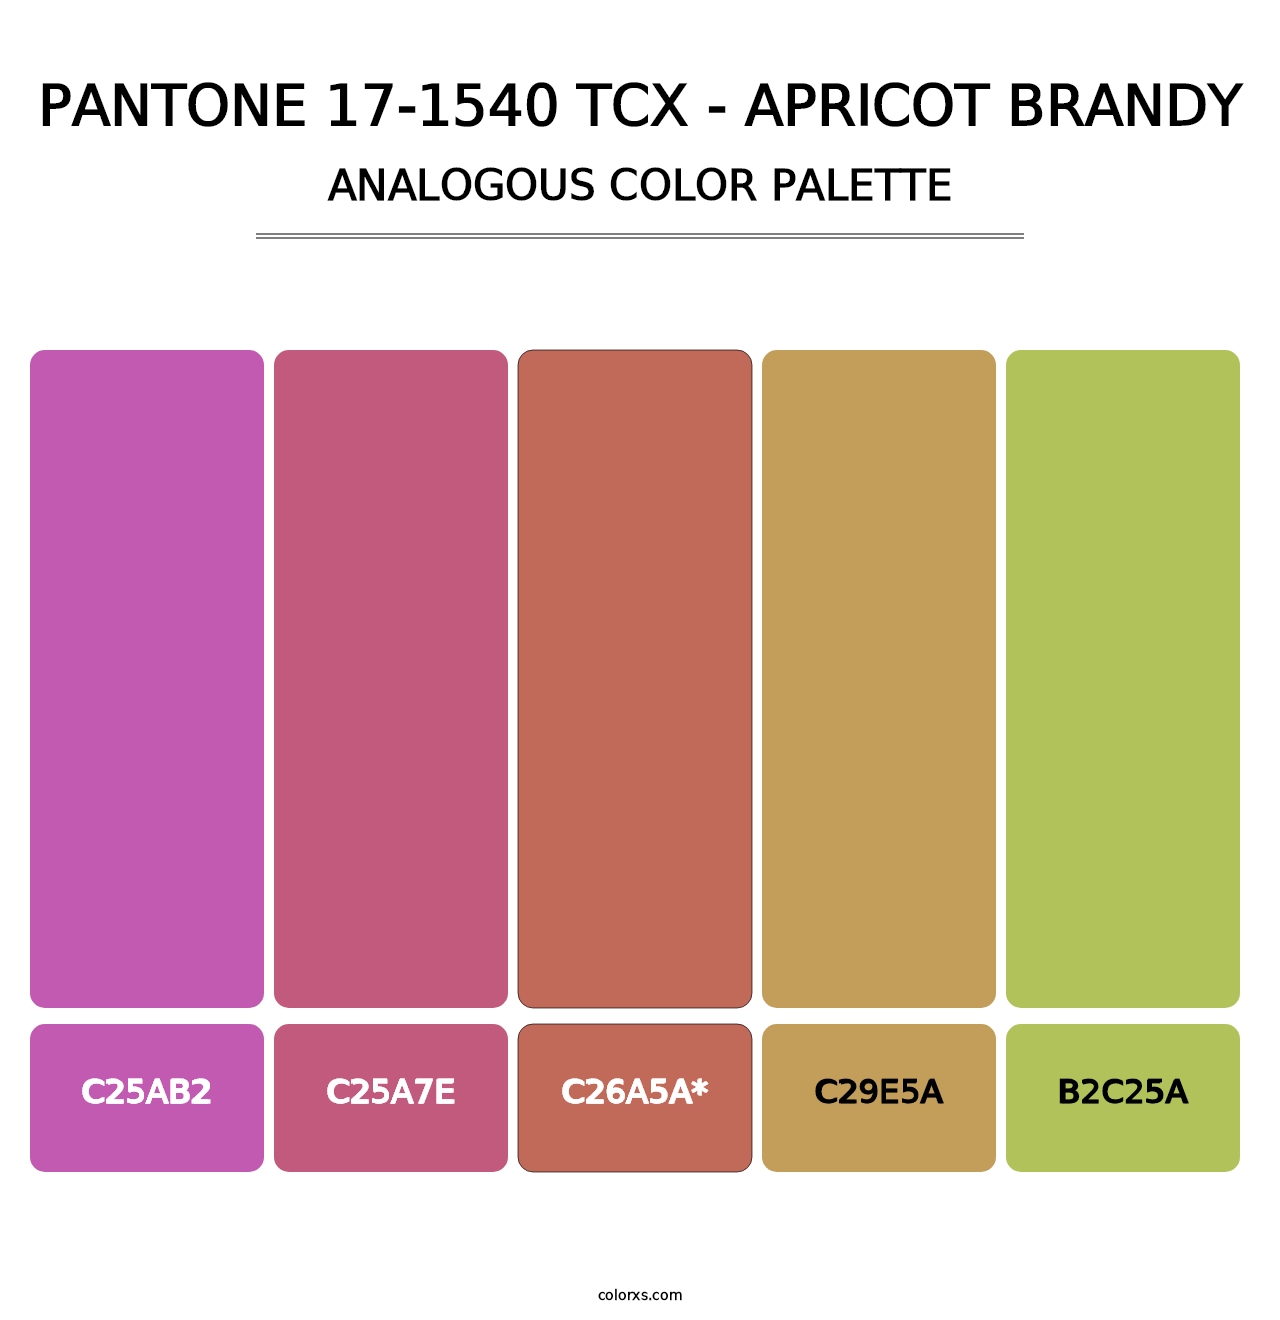 PANTONE 17-1540 TCX - Apricot Brandy - Analogous Color Palette